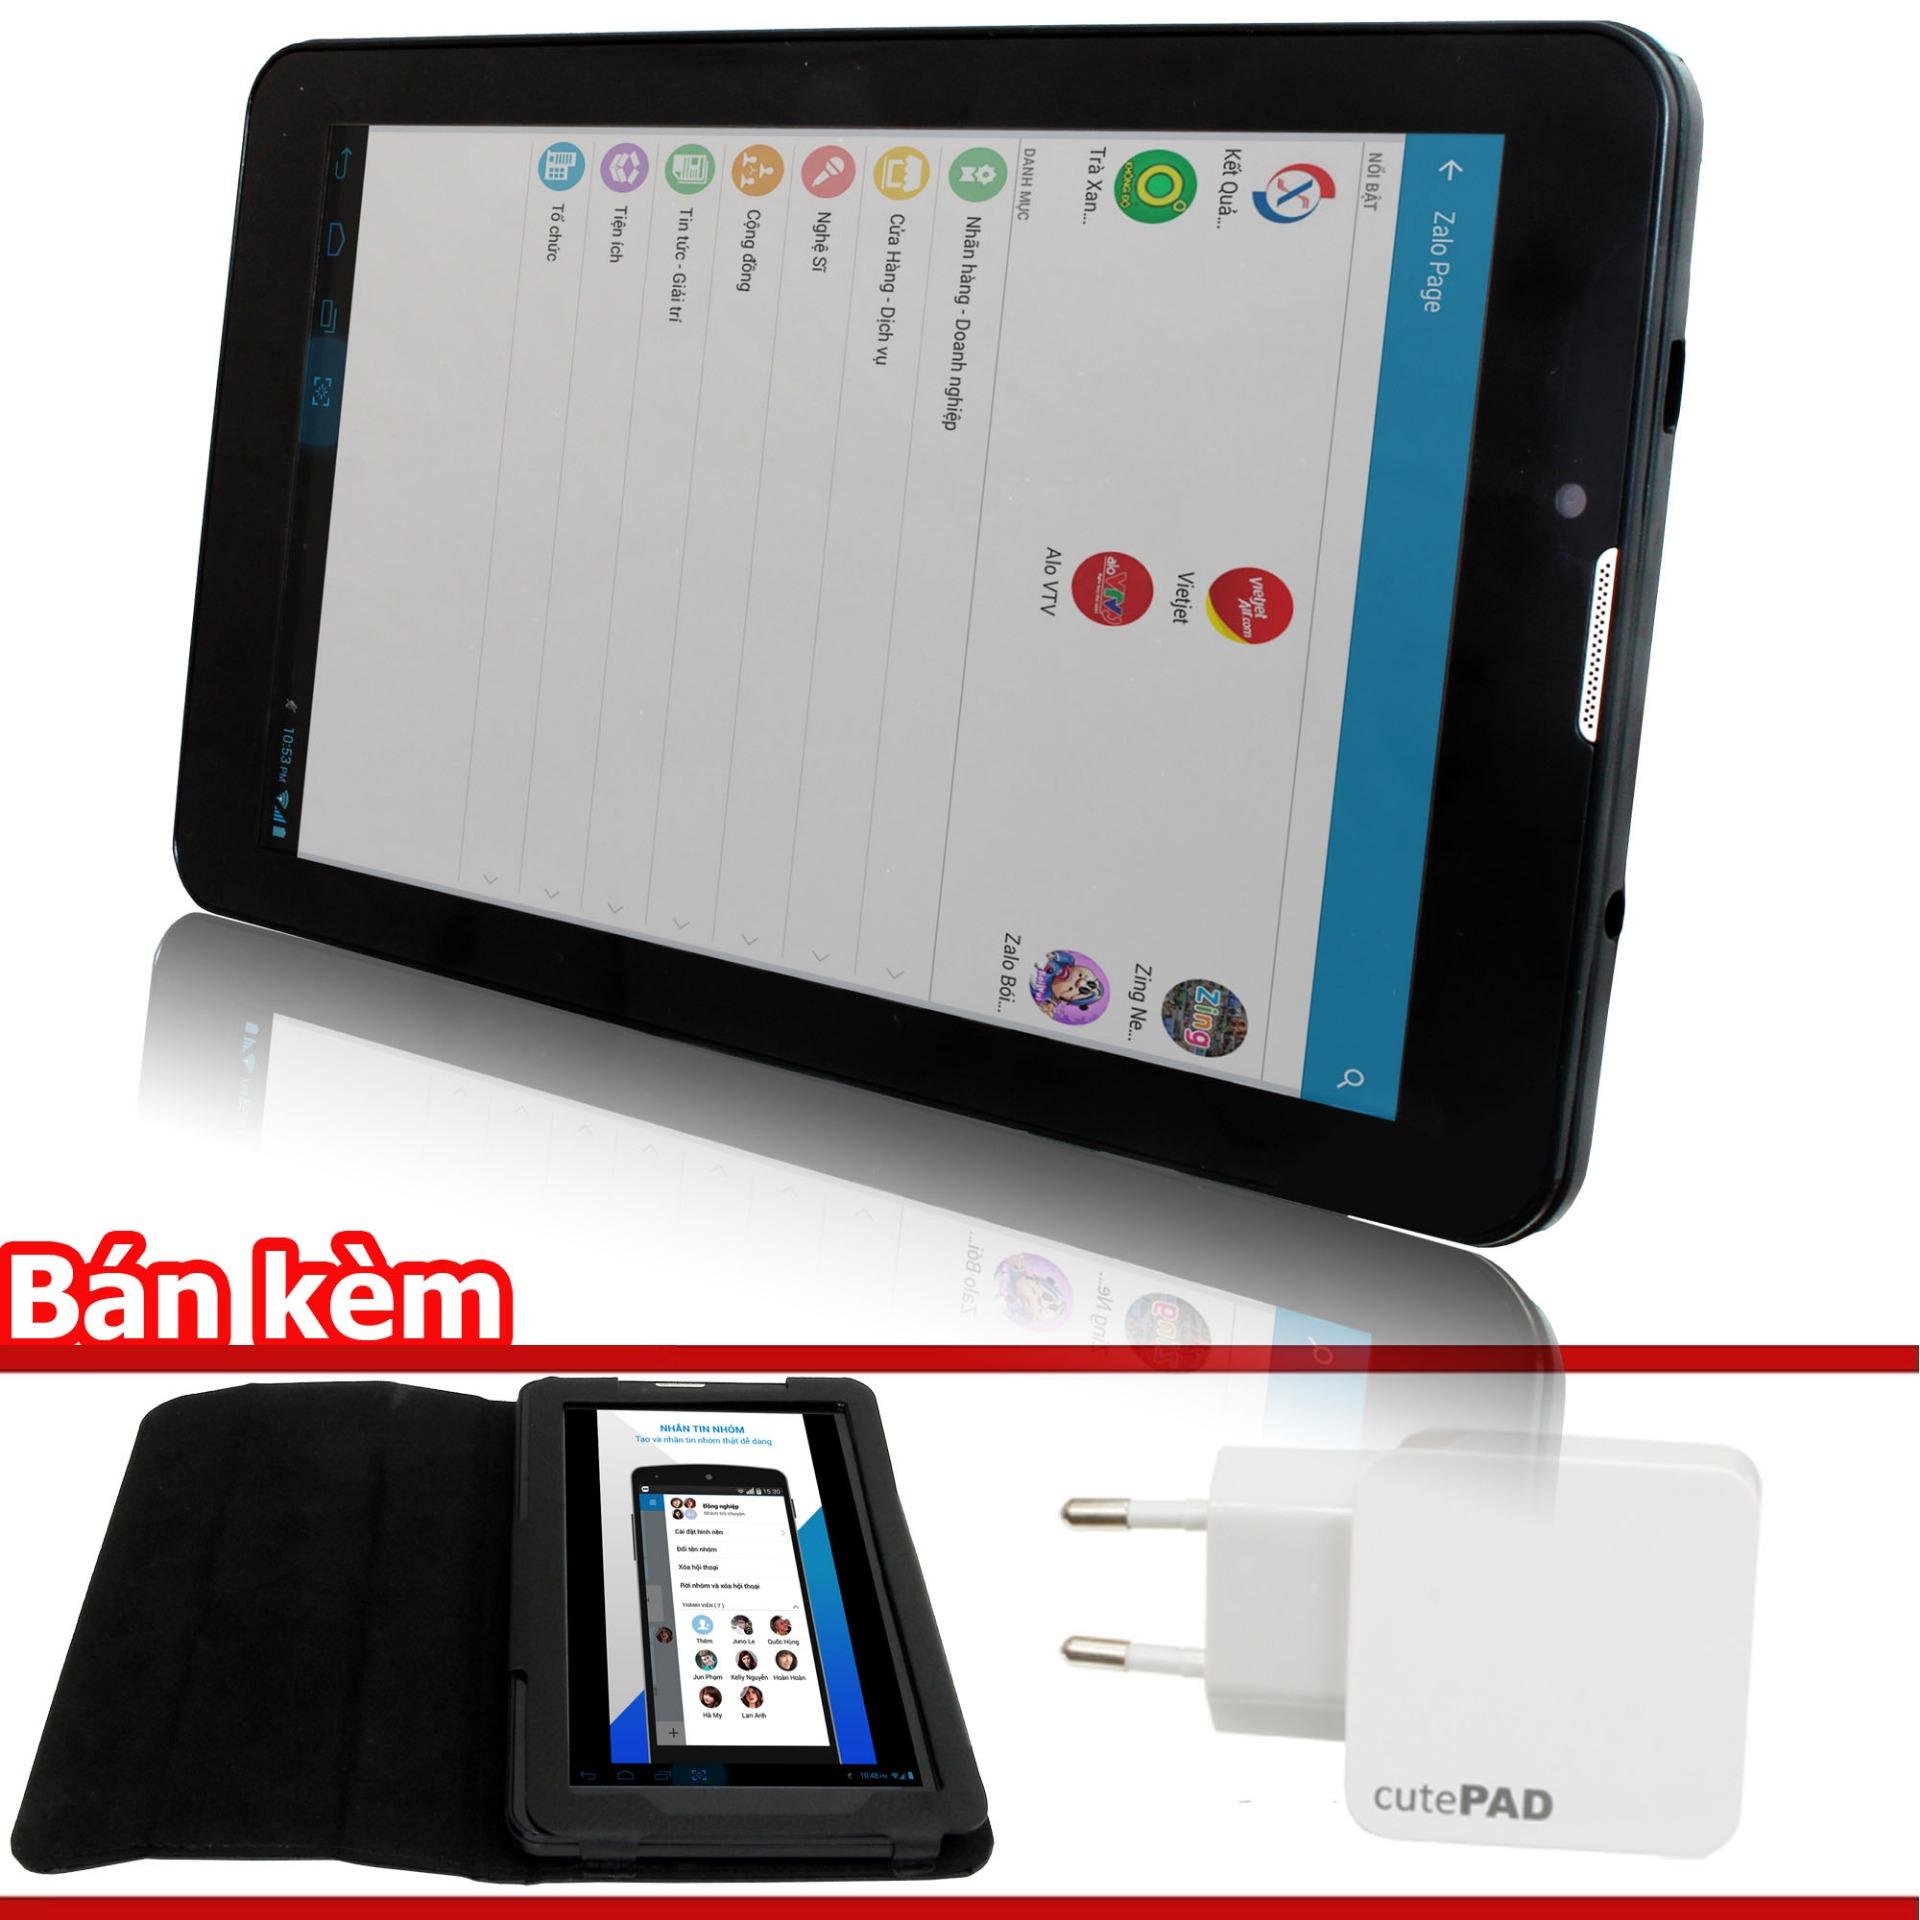 Máy tính bảng cutePad M7022 wifi/3G Đen+ Kèm bao da đen+ cục sạc cutePad TX-P113 Trắng